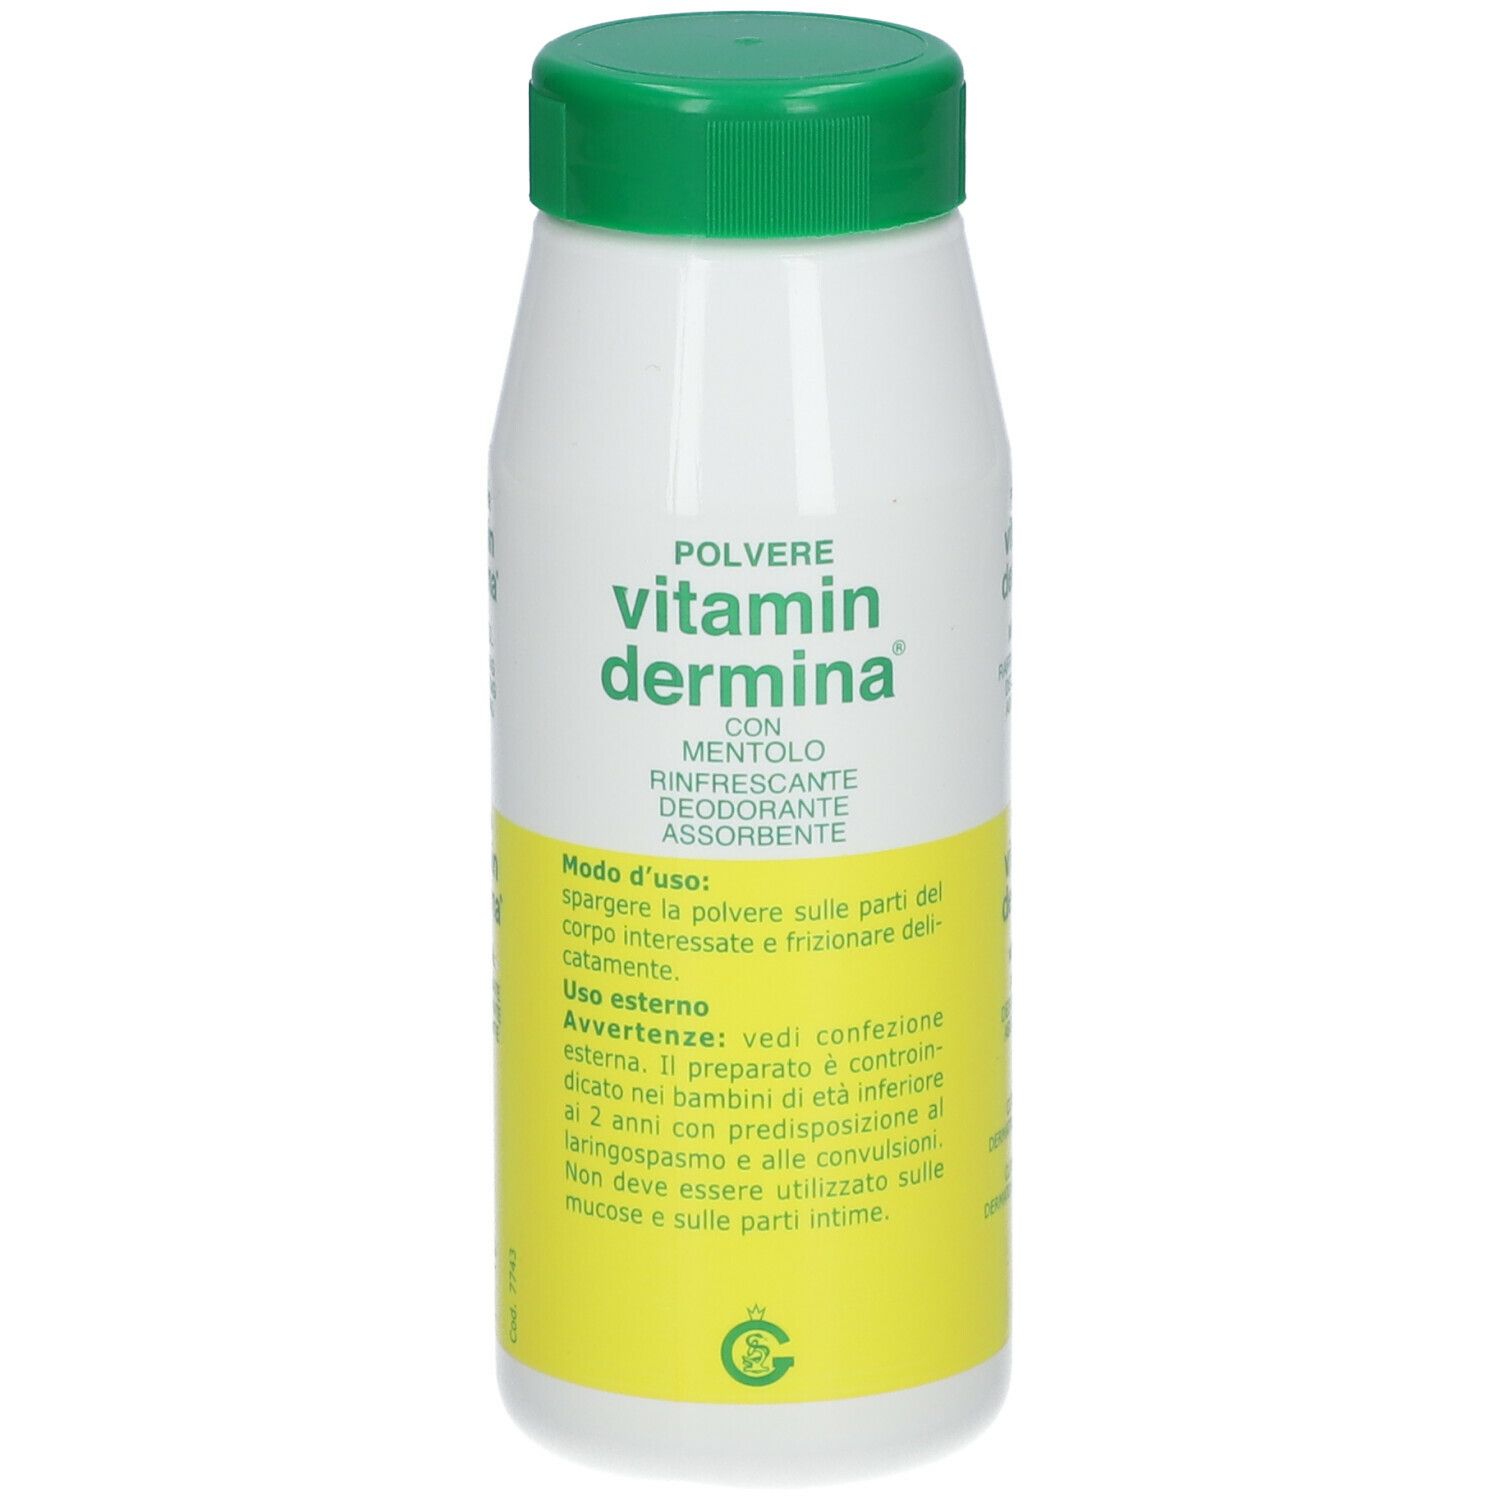 Vitamin Dermina® Polvere al Mentolo